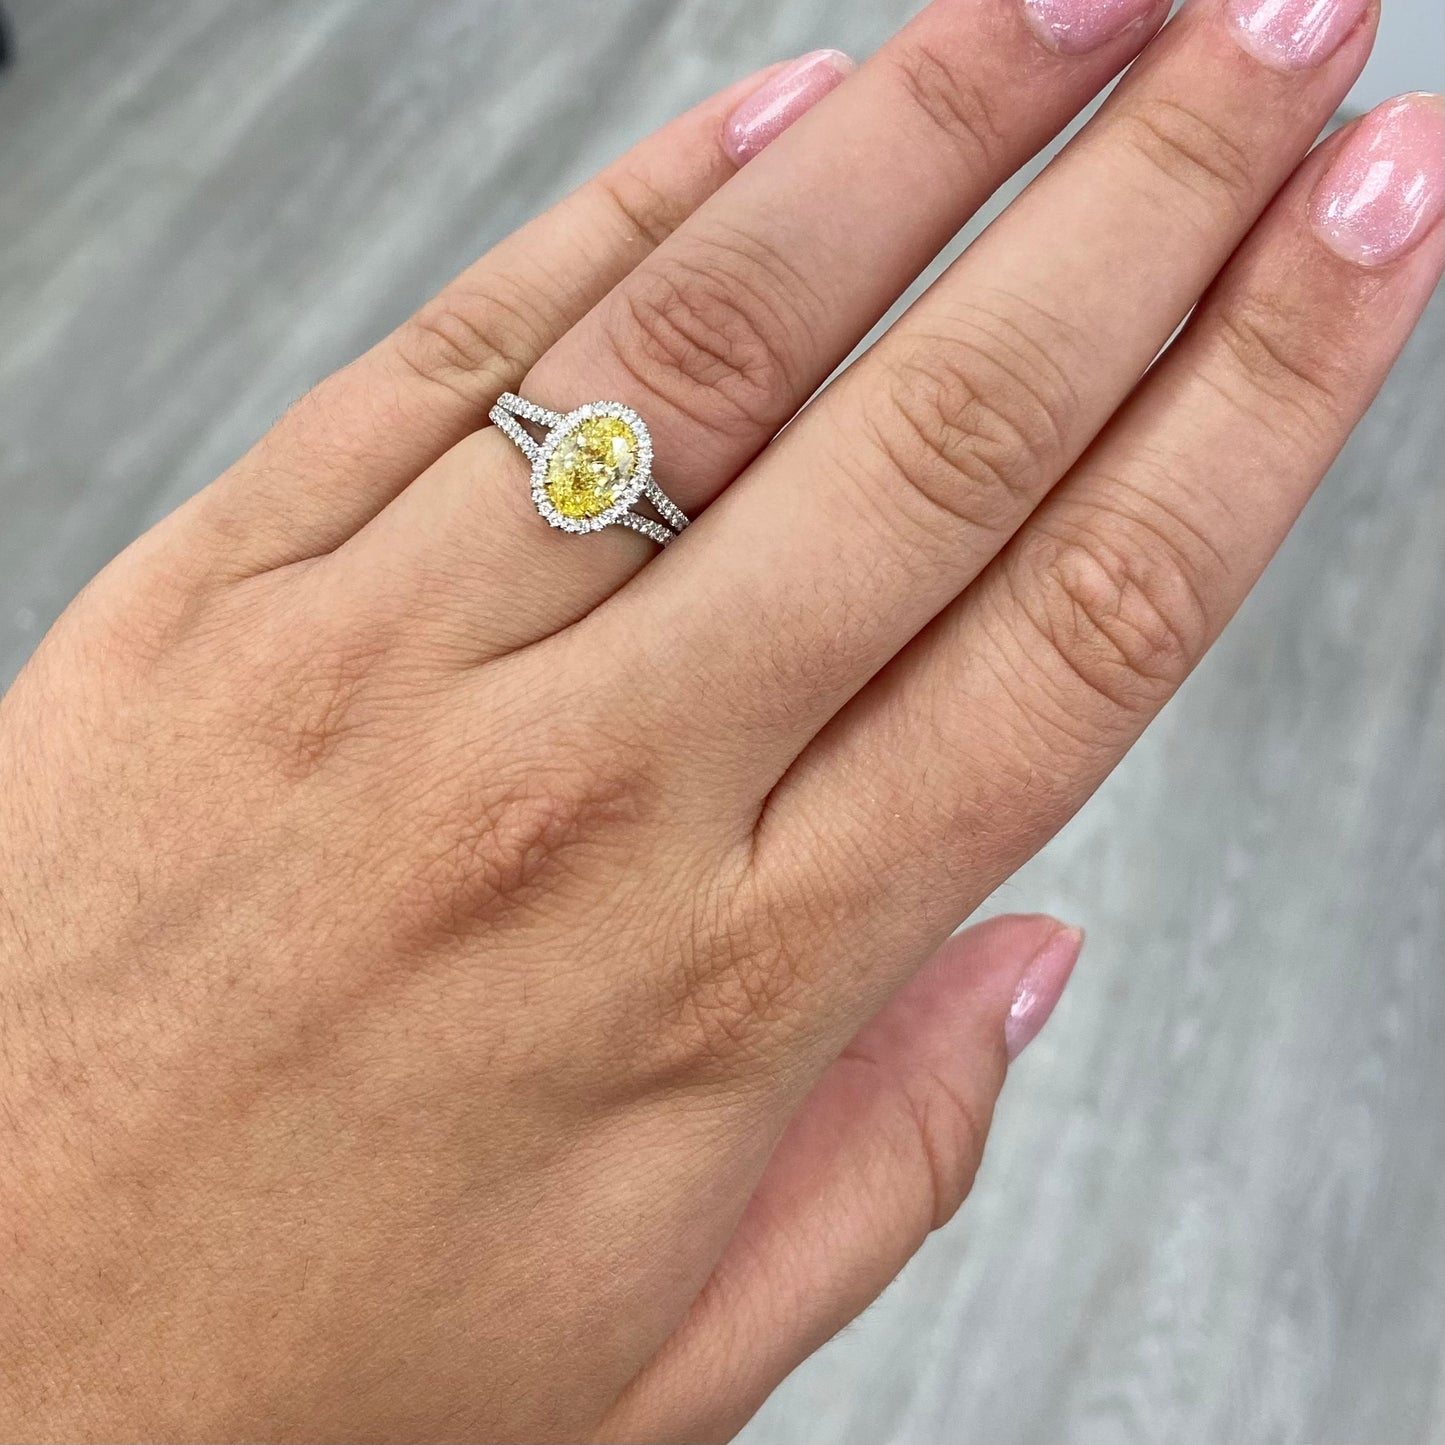 Fancy intense yellow oval diamond ring